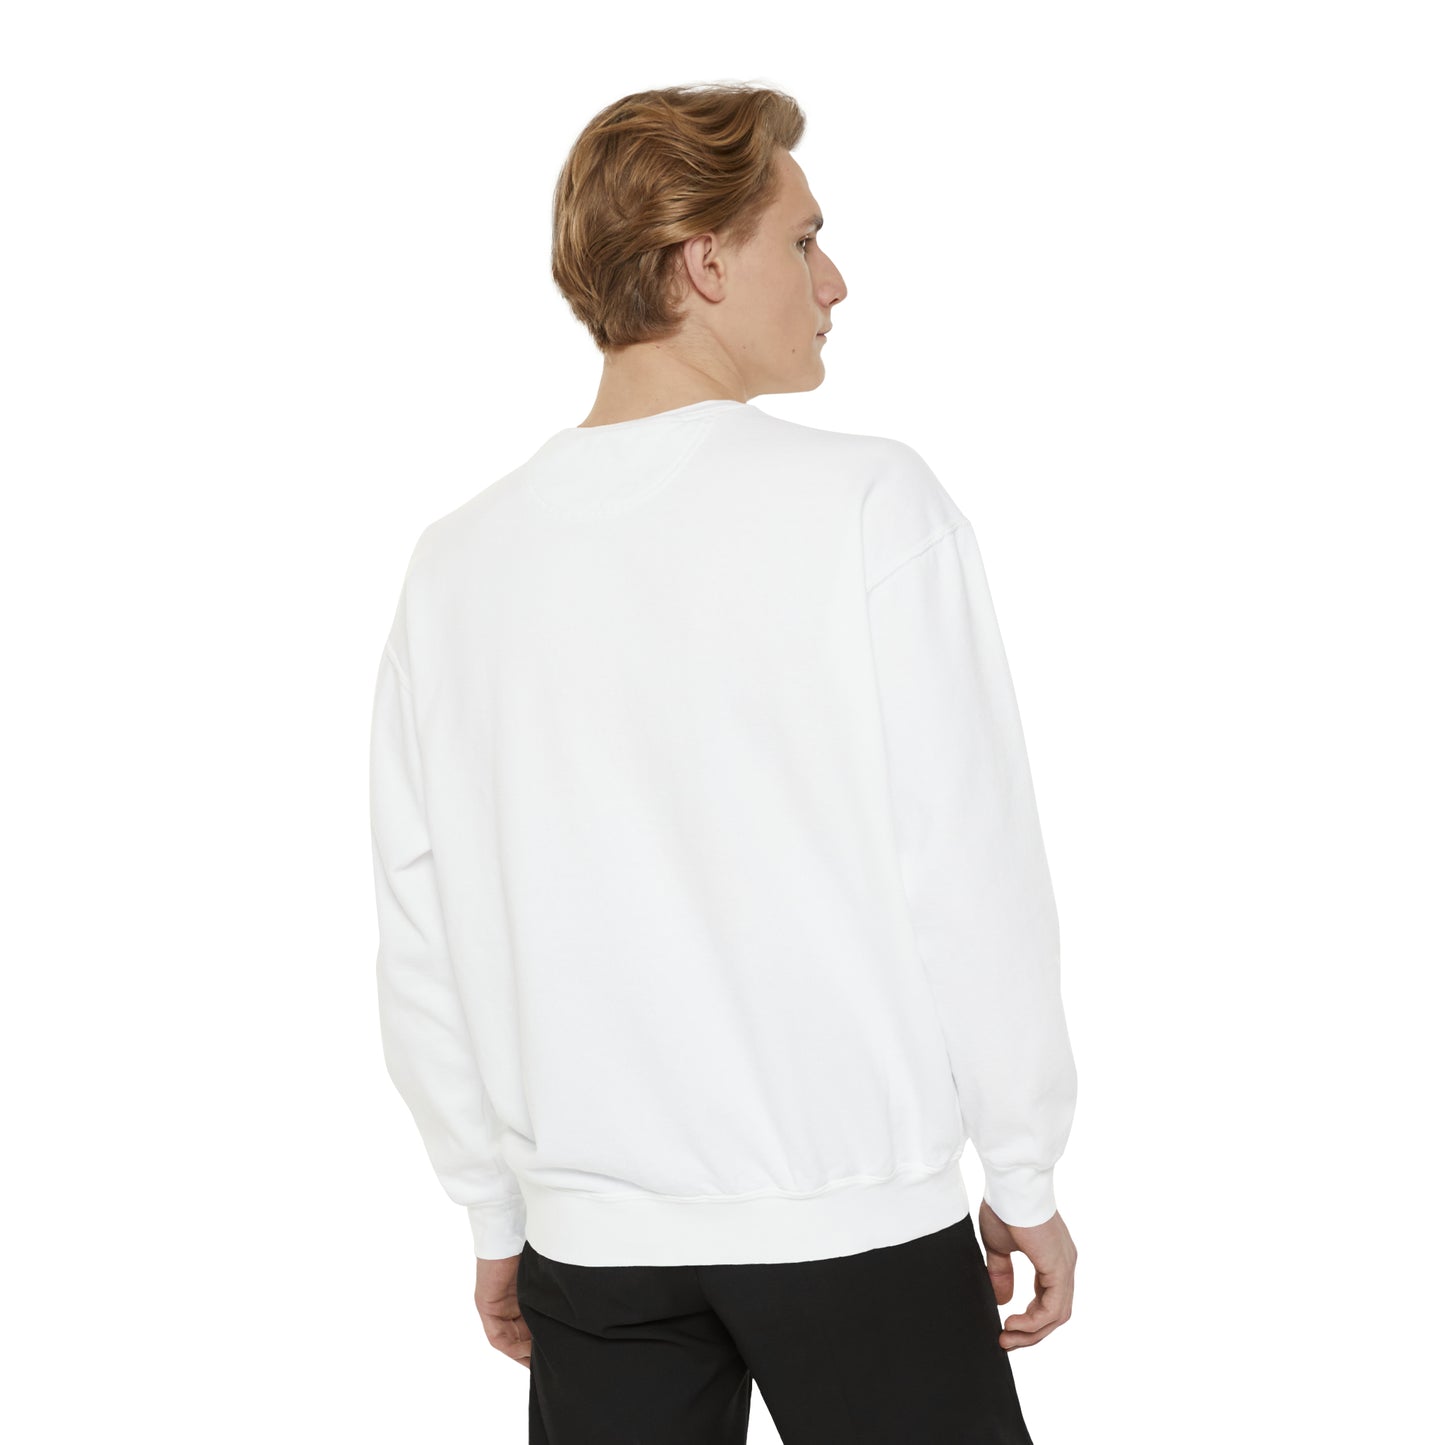 Bully-Proof Unisex Garment-Dyed Sweatshirt